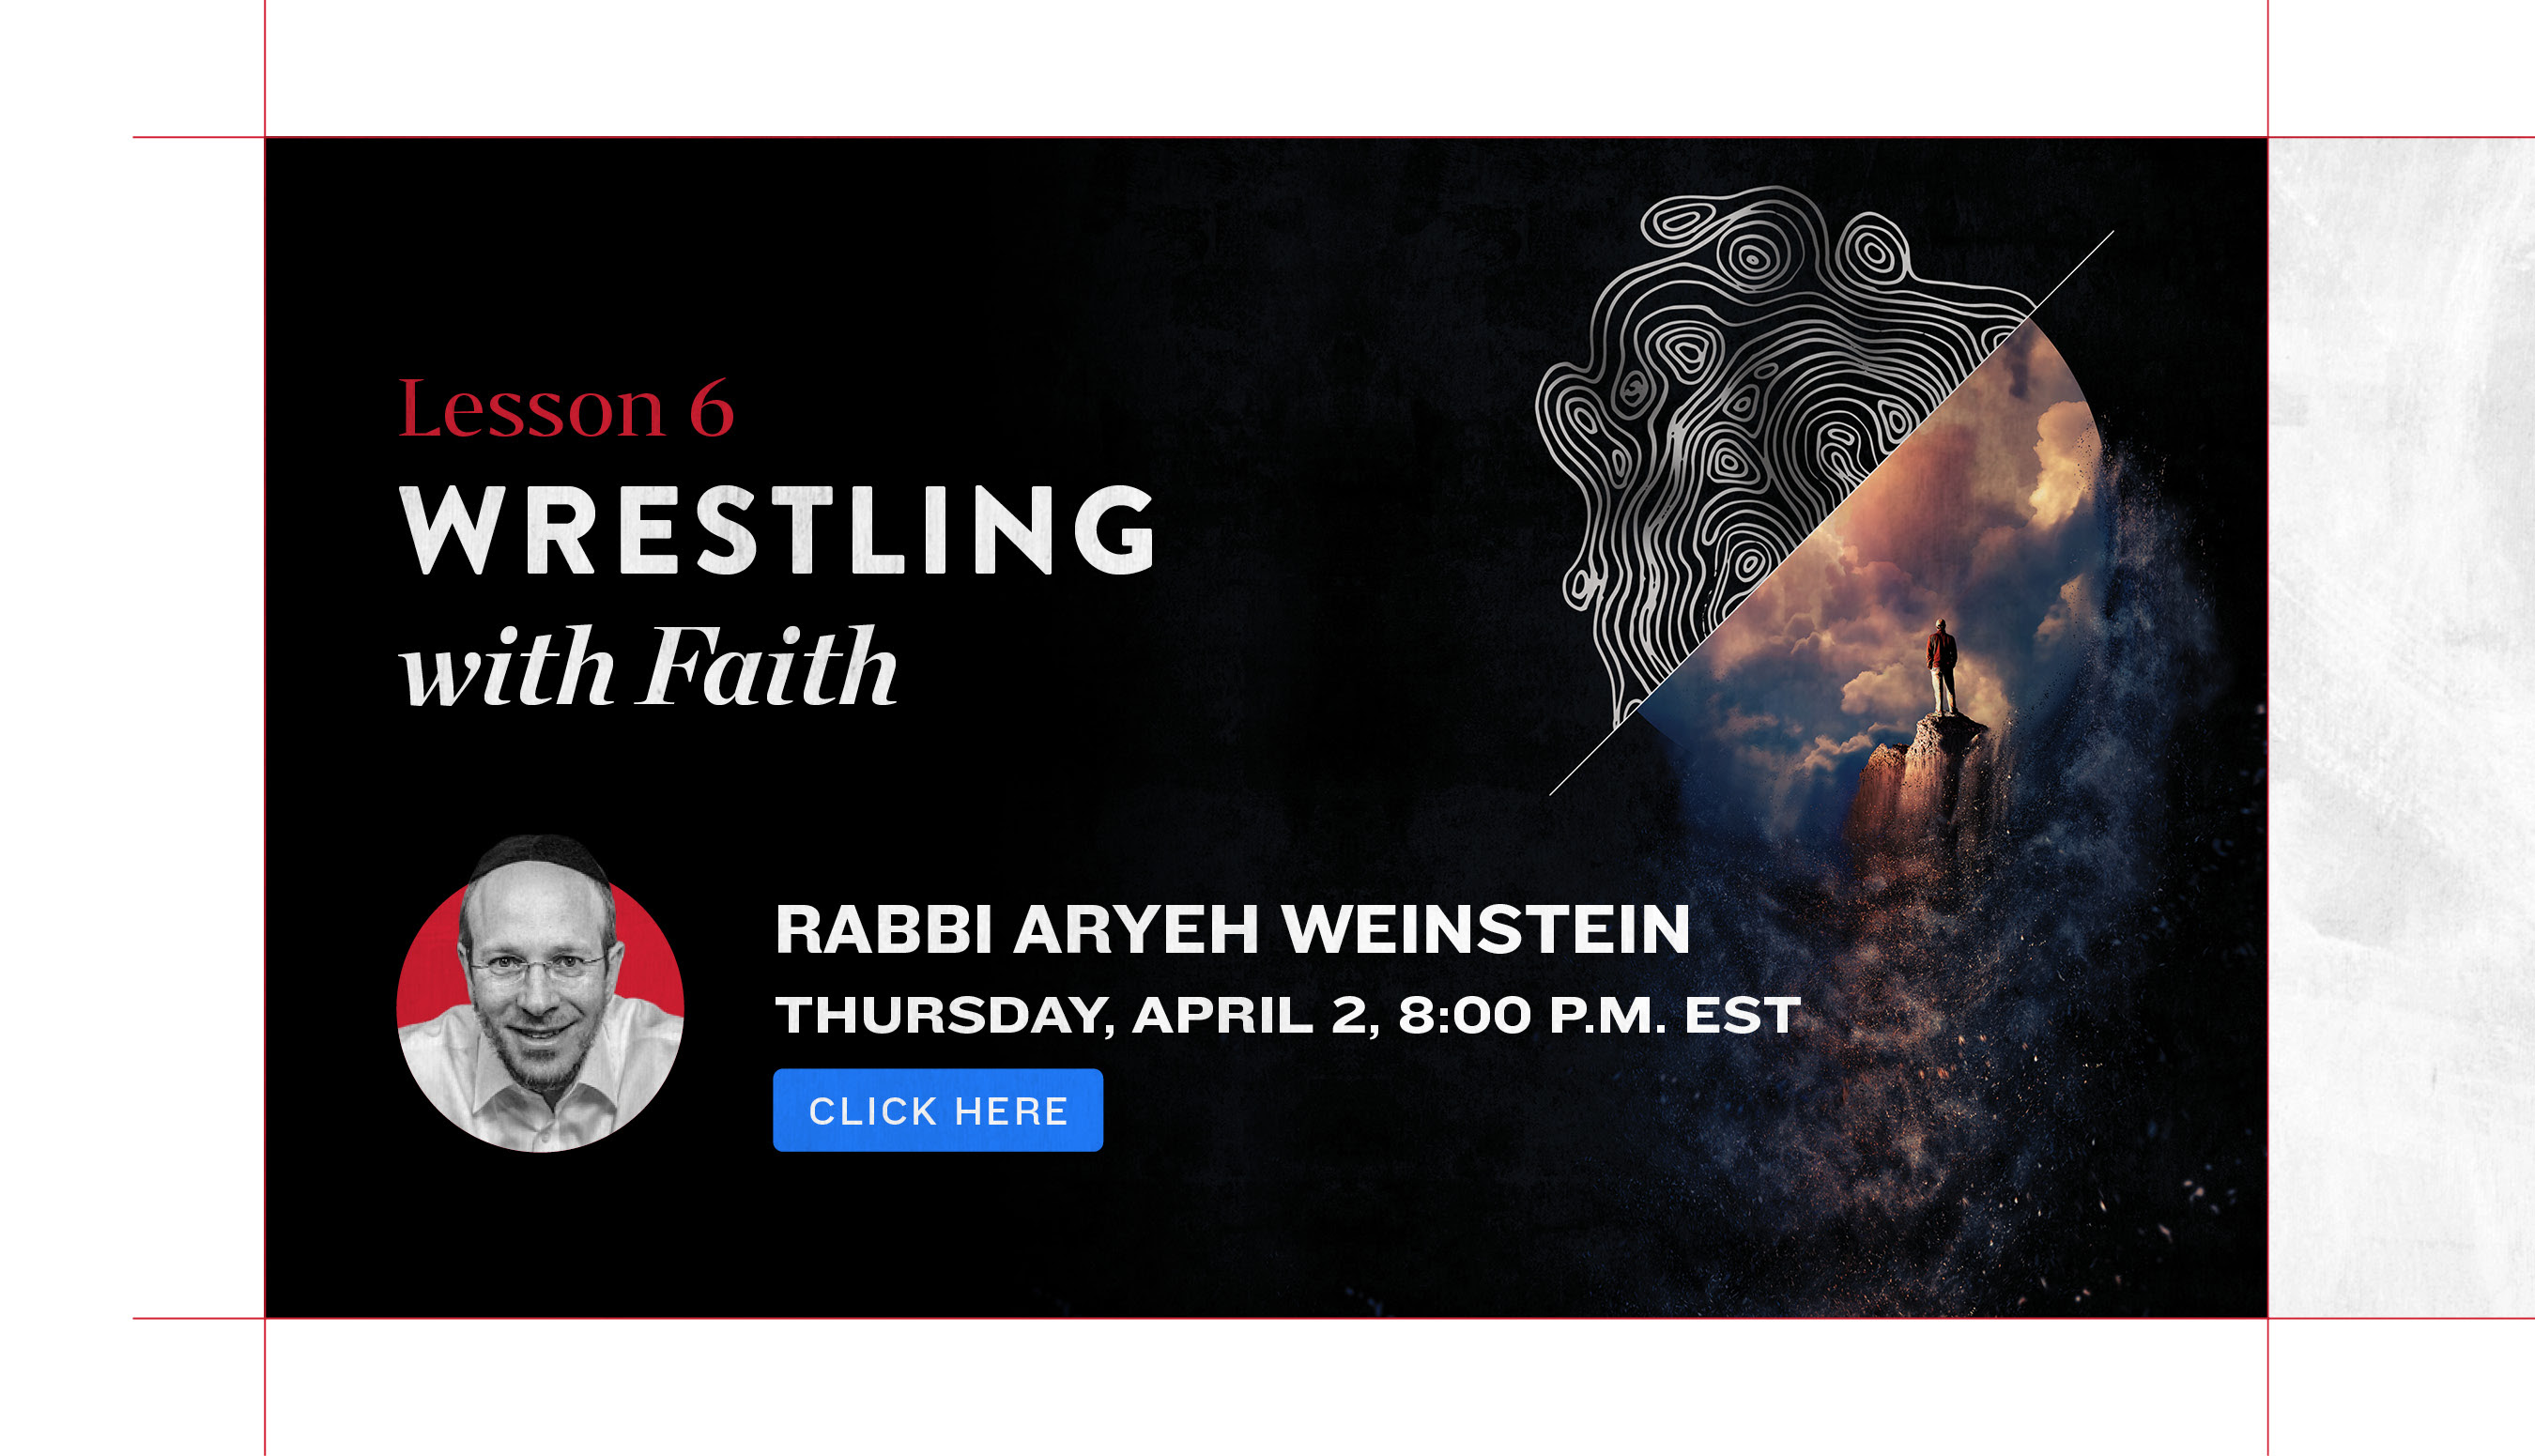 Wrestling with Faith Lesson 6. Rabbi Aryeh Weinstein